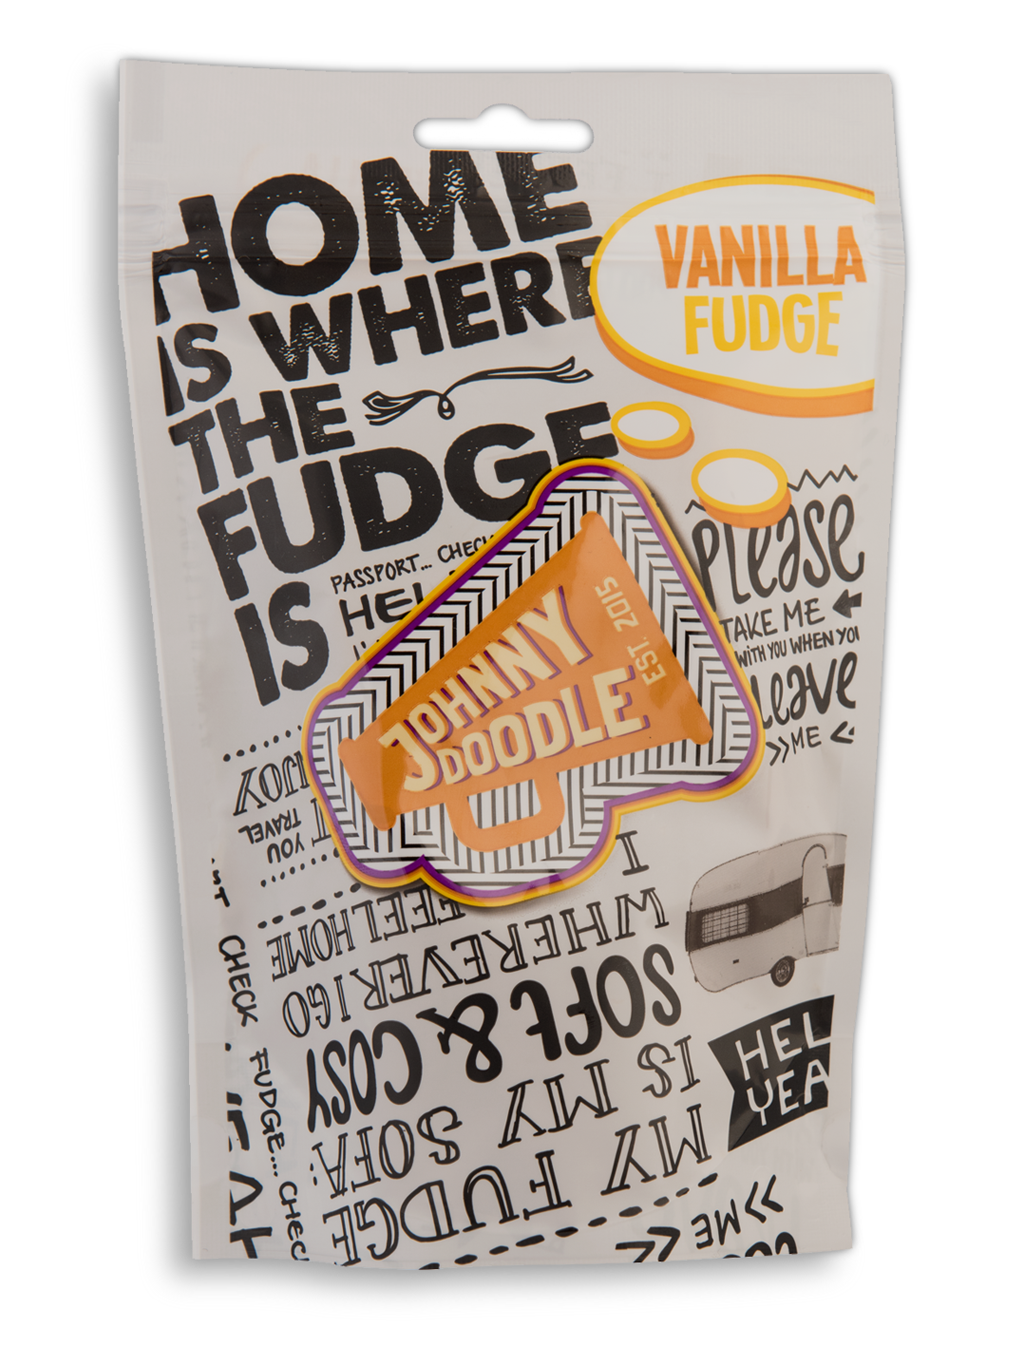 Johnny Doodle – karamelky, vanilka, 200 gramů